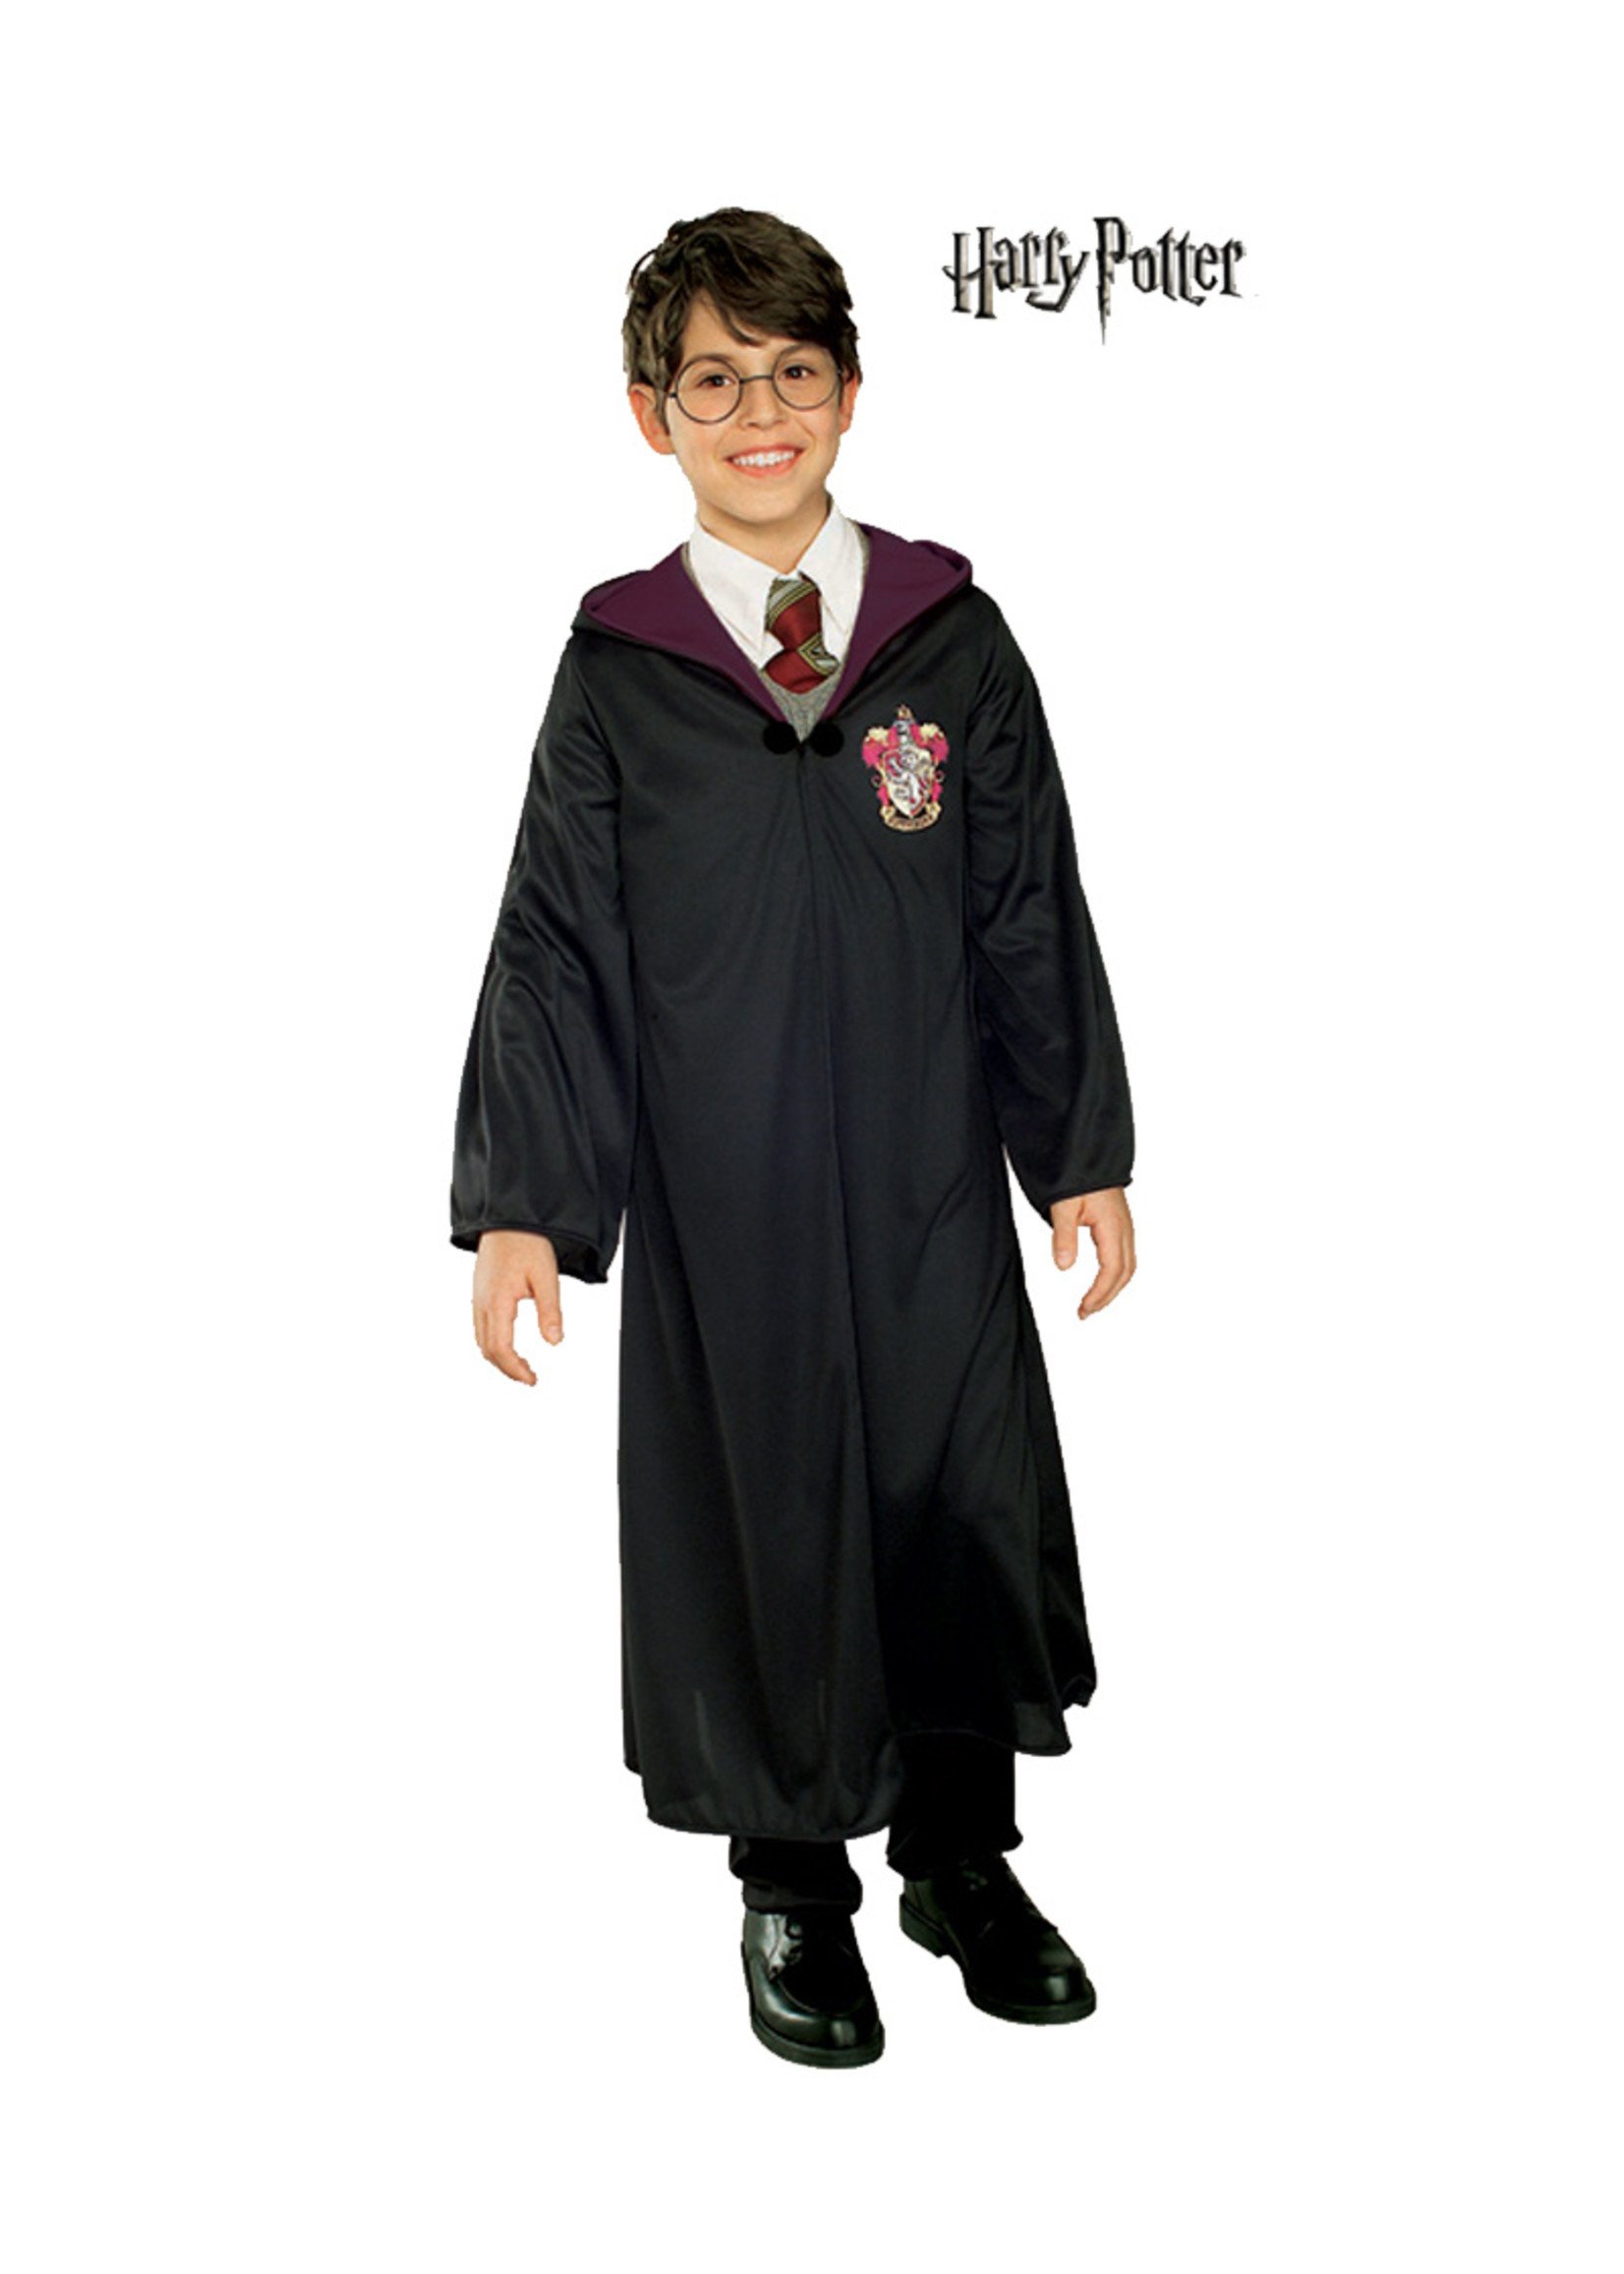 Harry Potter Robe Costume - Boys